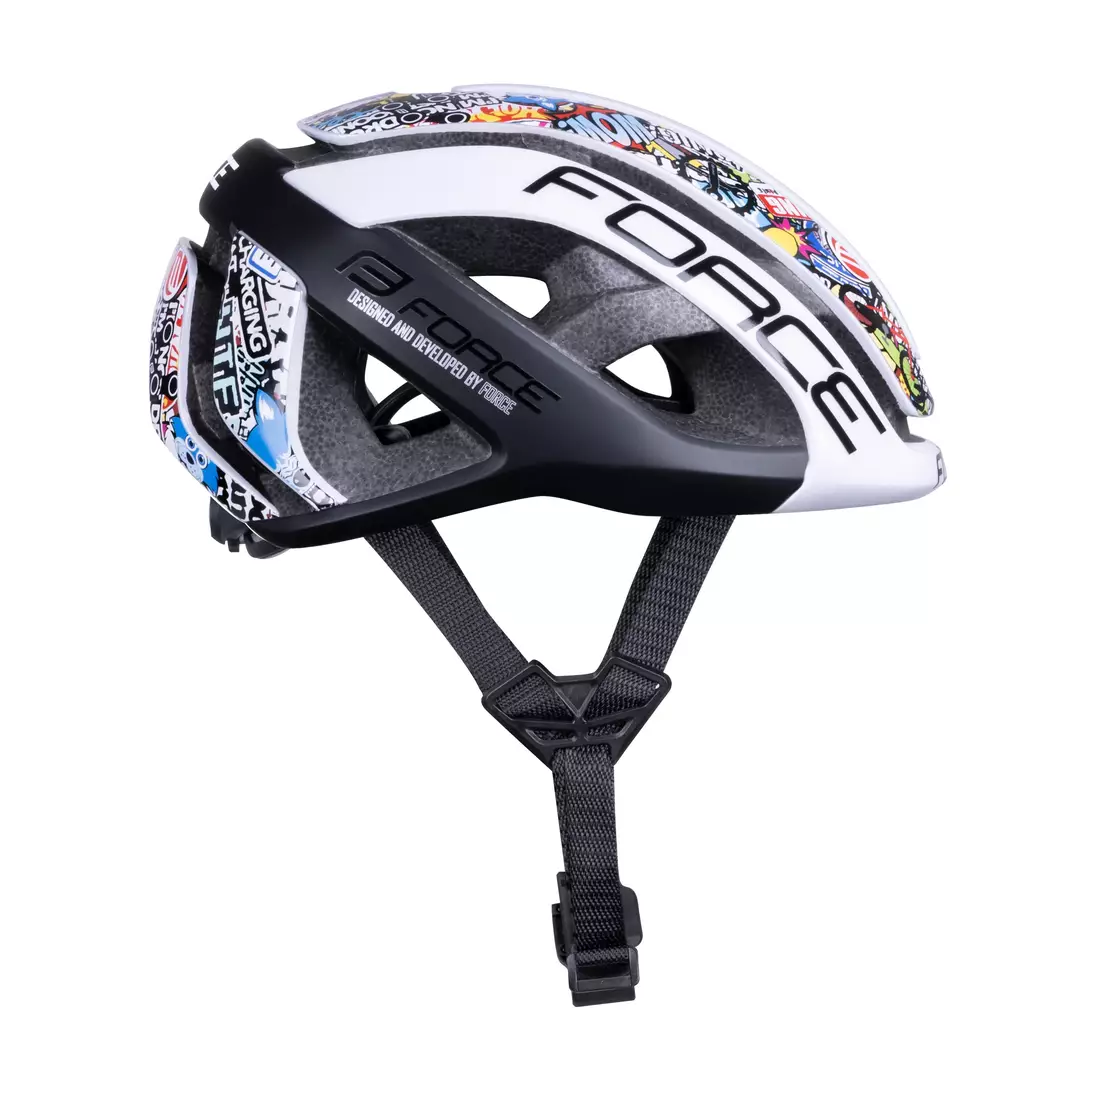 FORCE road bike helmet NEO VIVID black/white 902824